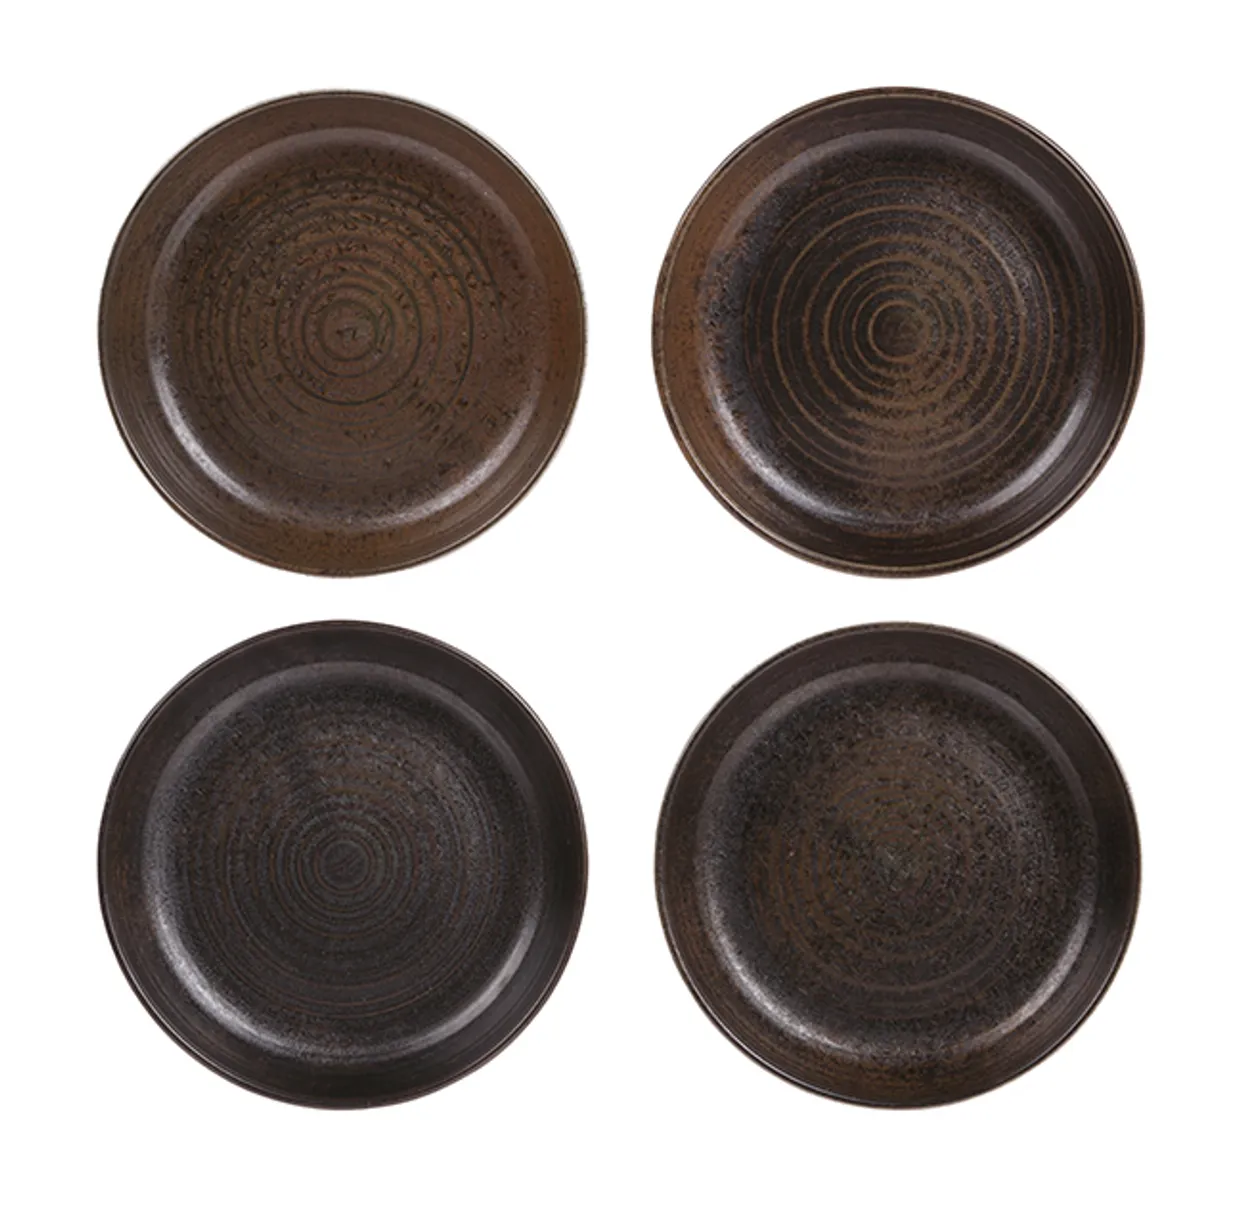 Chef ceramics: deep plate rustic black